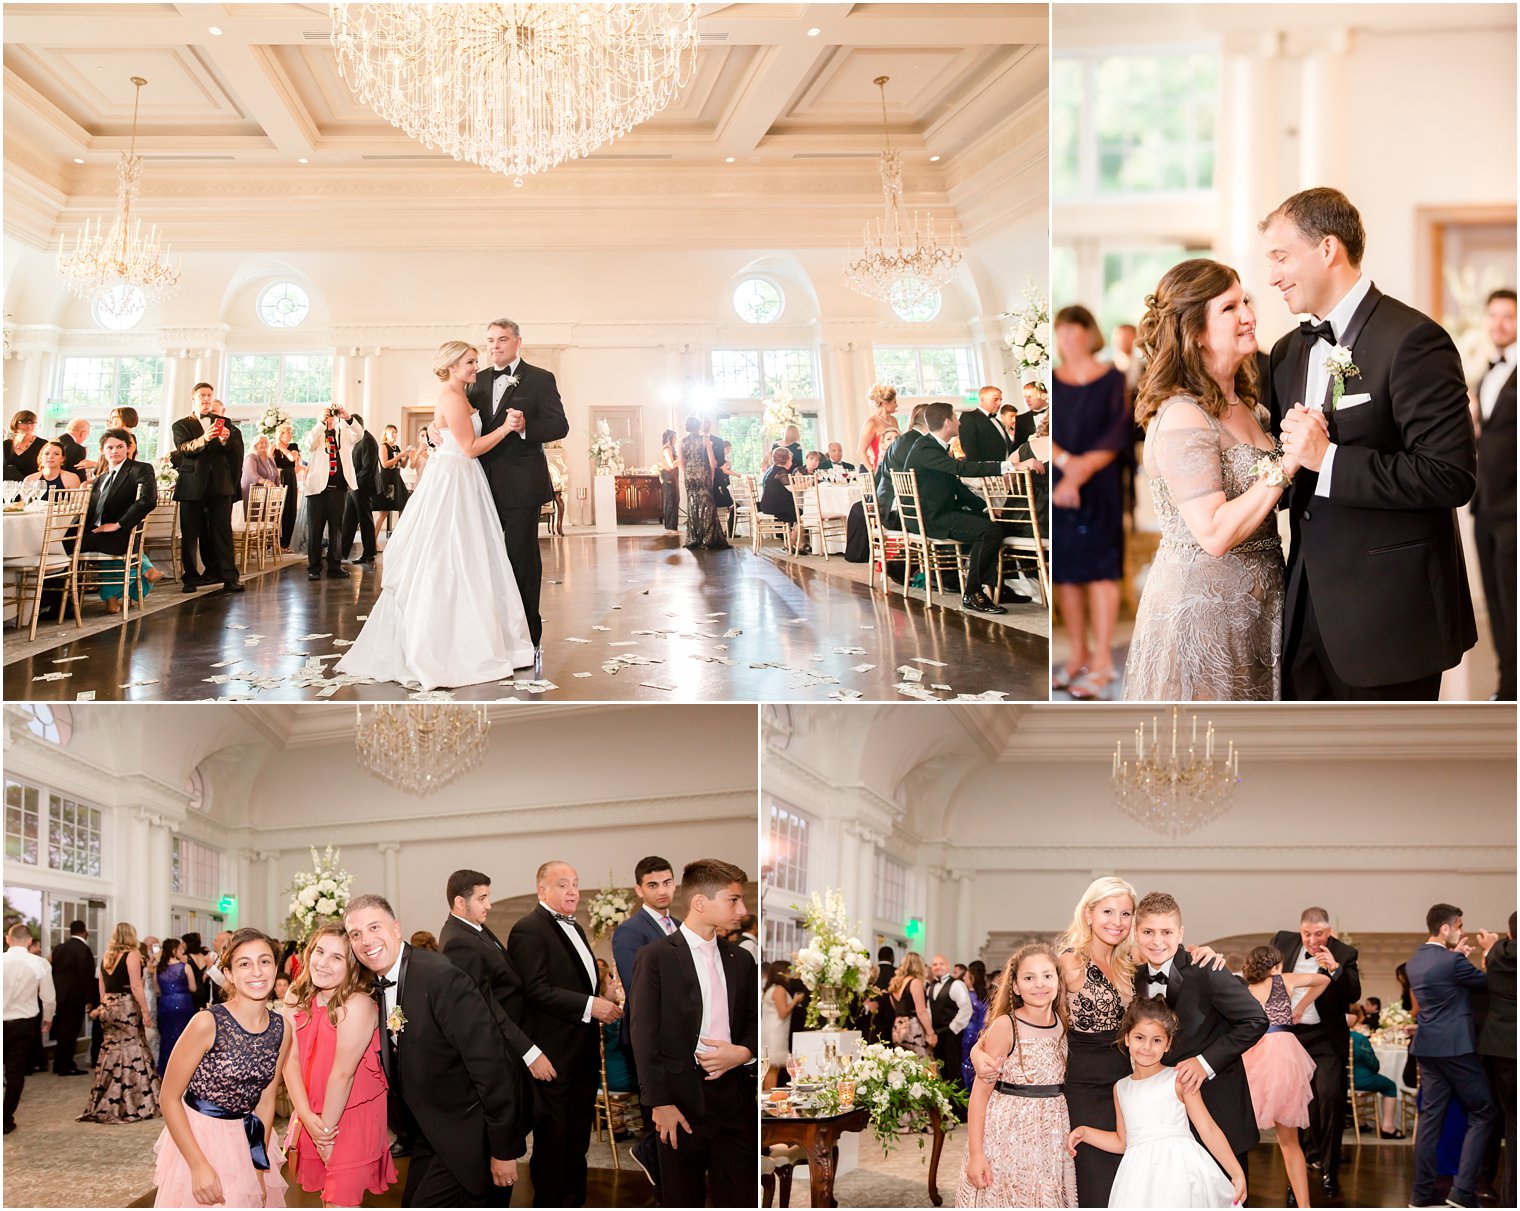 Wedding reception photos at Park Chateau